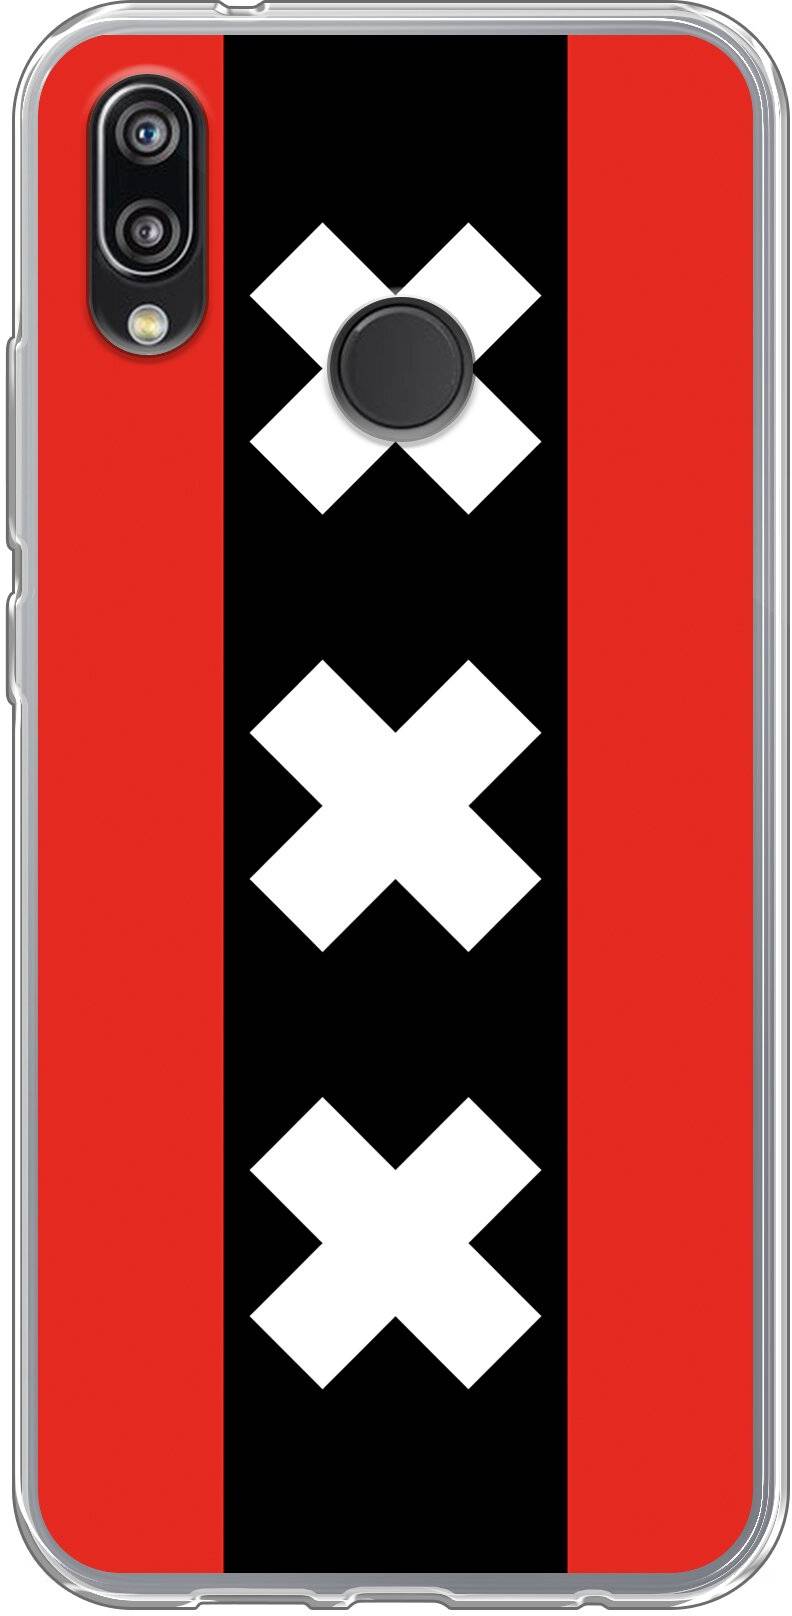 Amsterdamse vlag P20 Lite (2018)